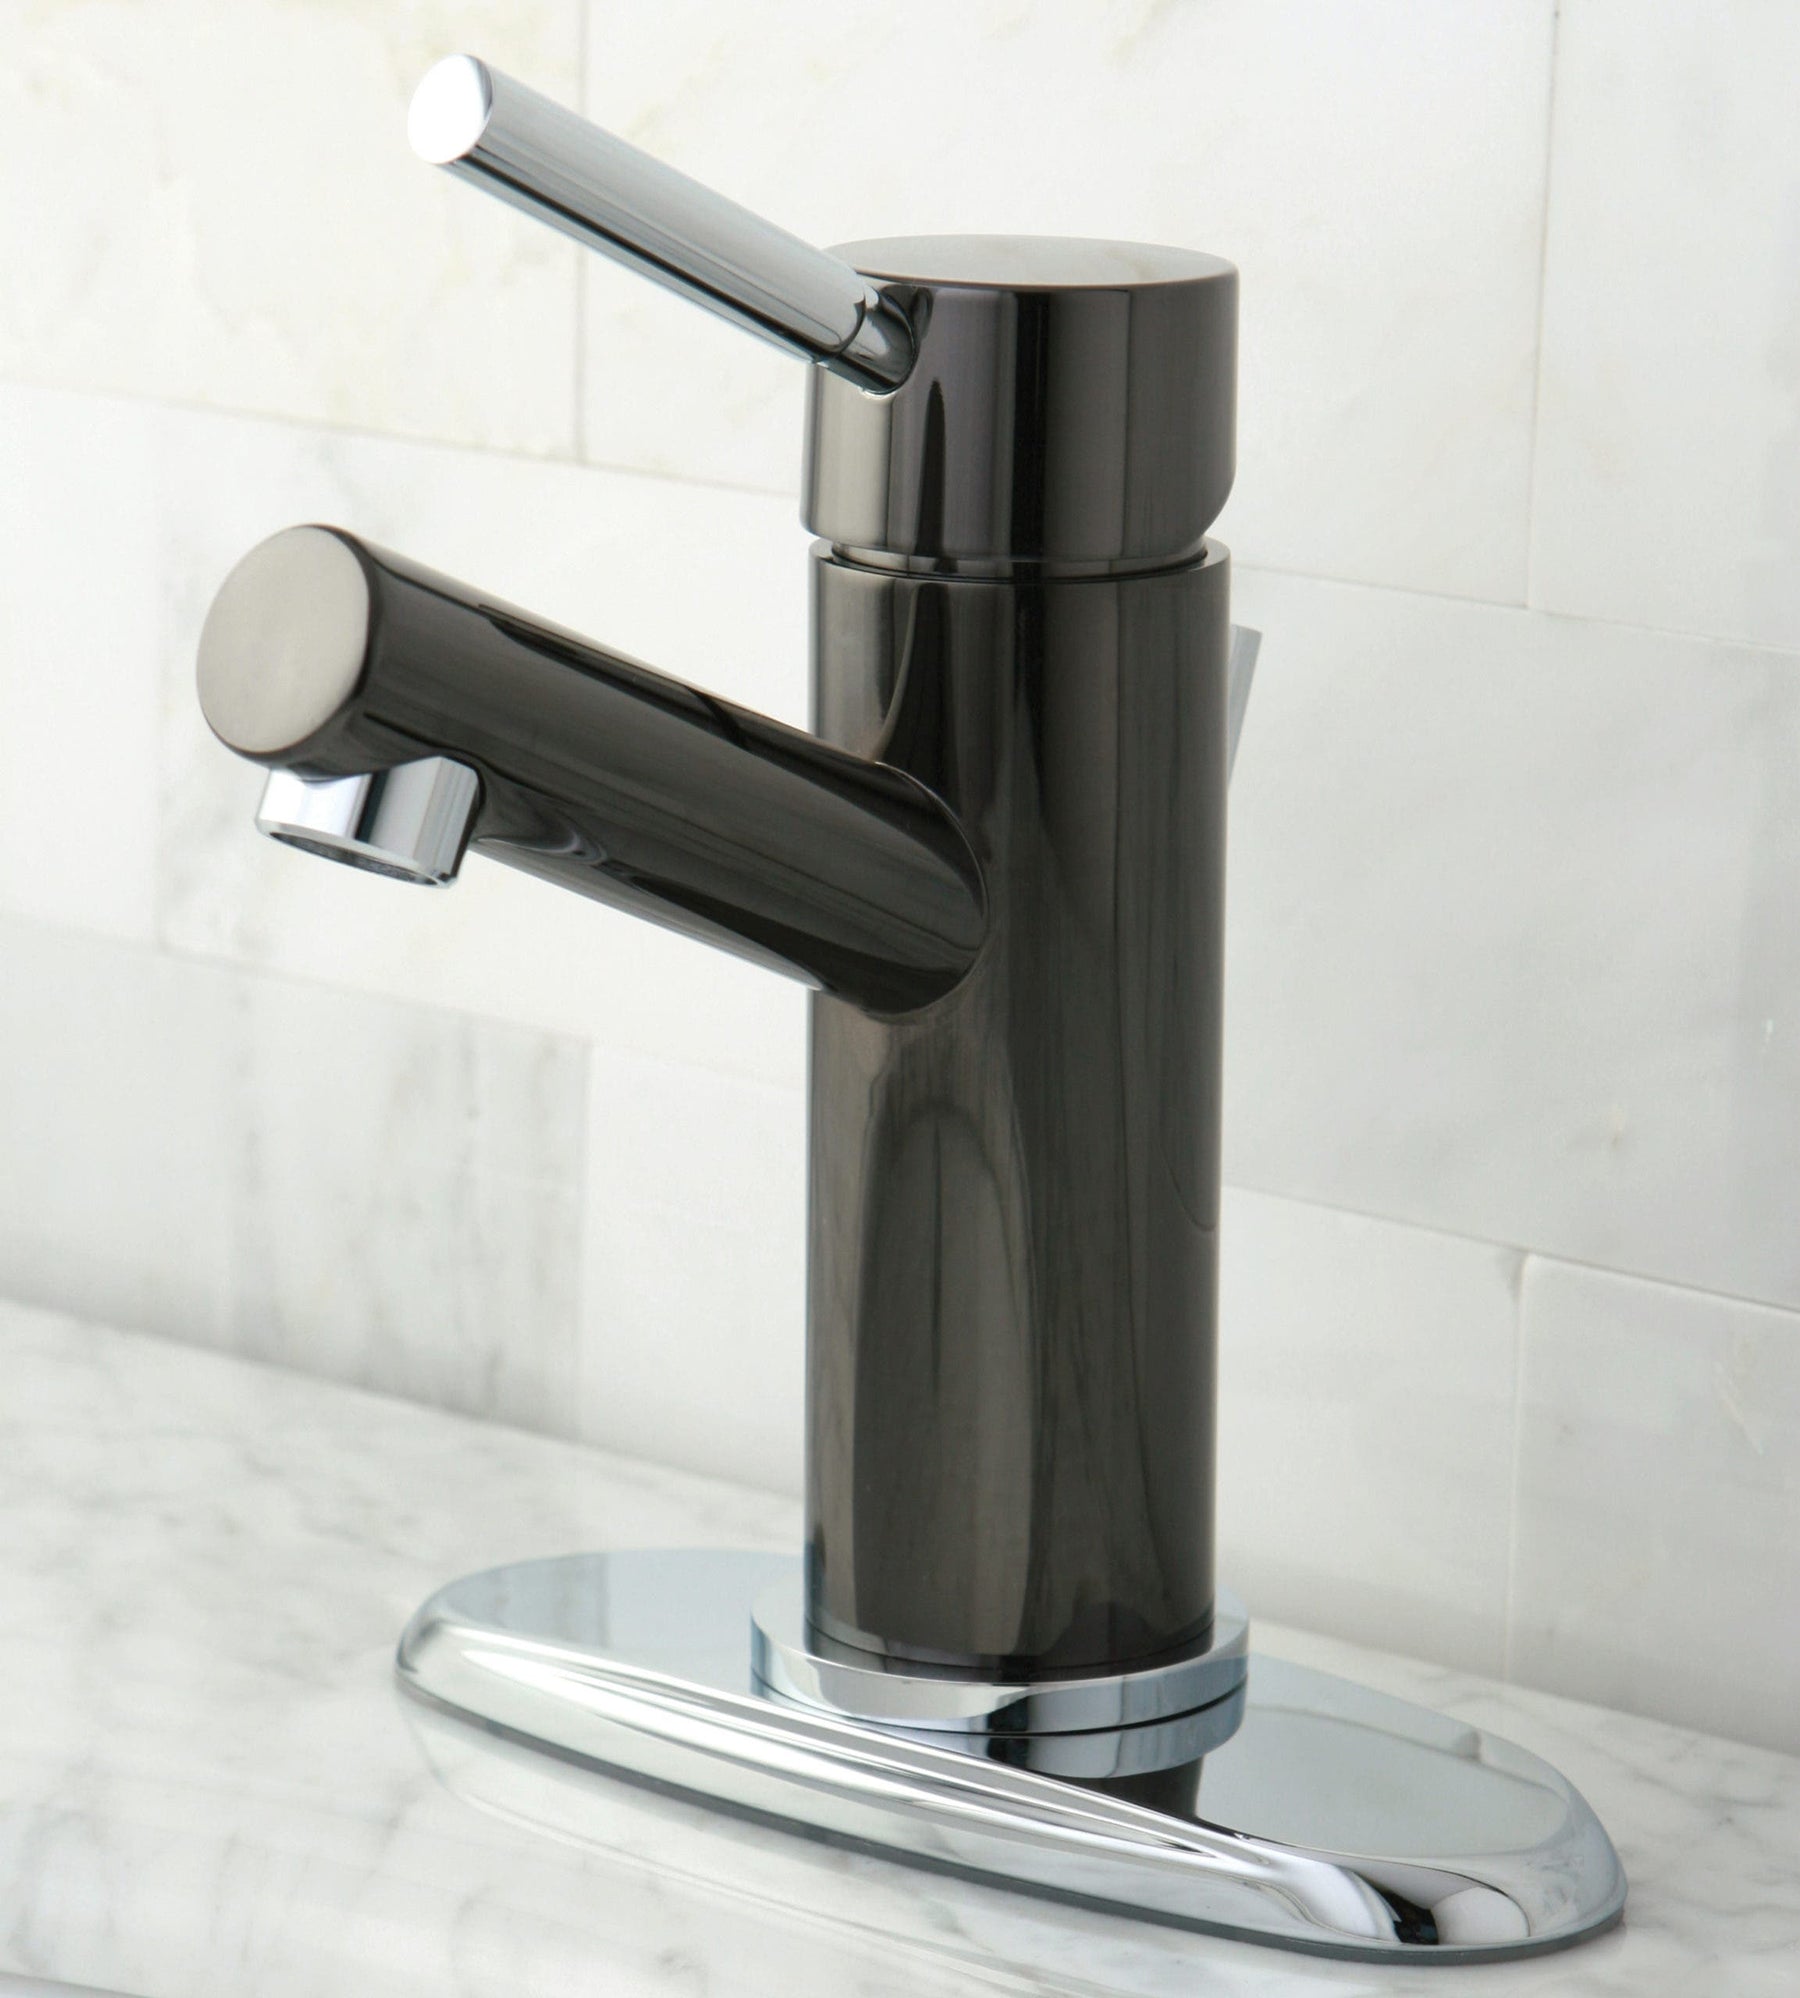 Faucet Feature 8: Profile of the NS8423DL lavatory faucet